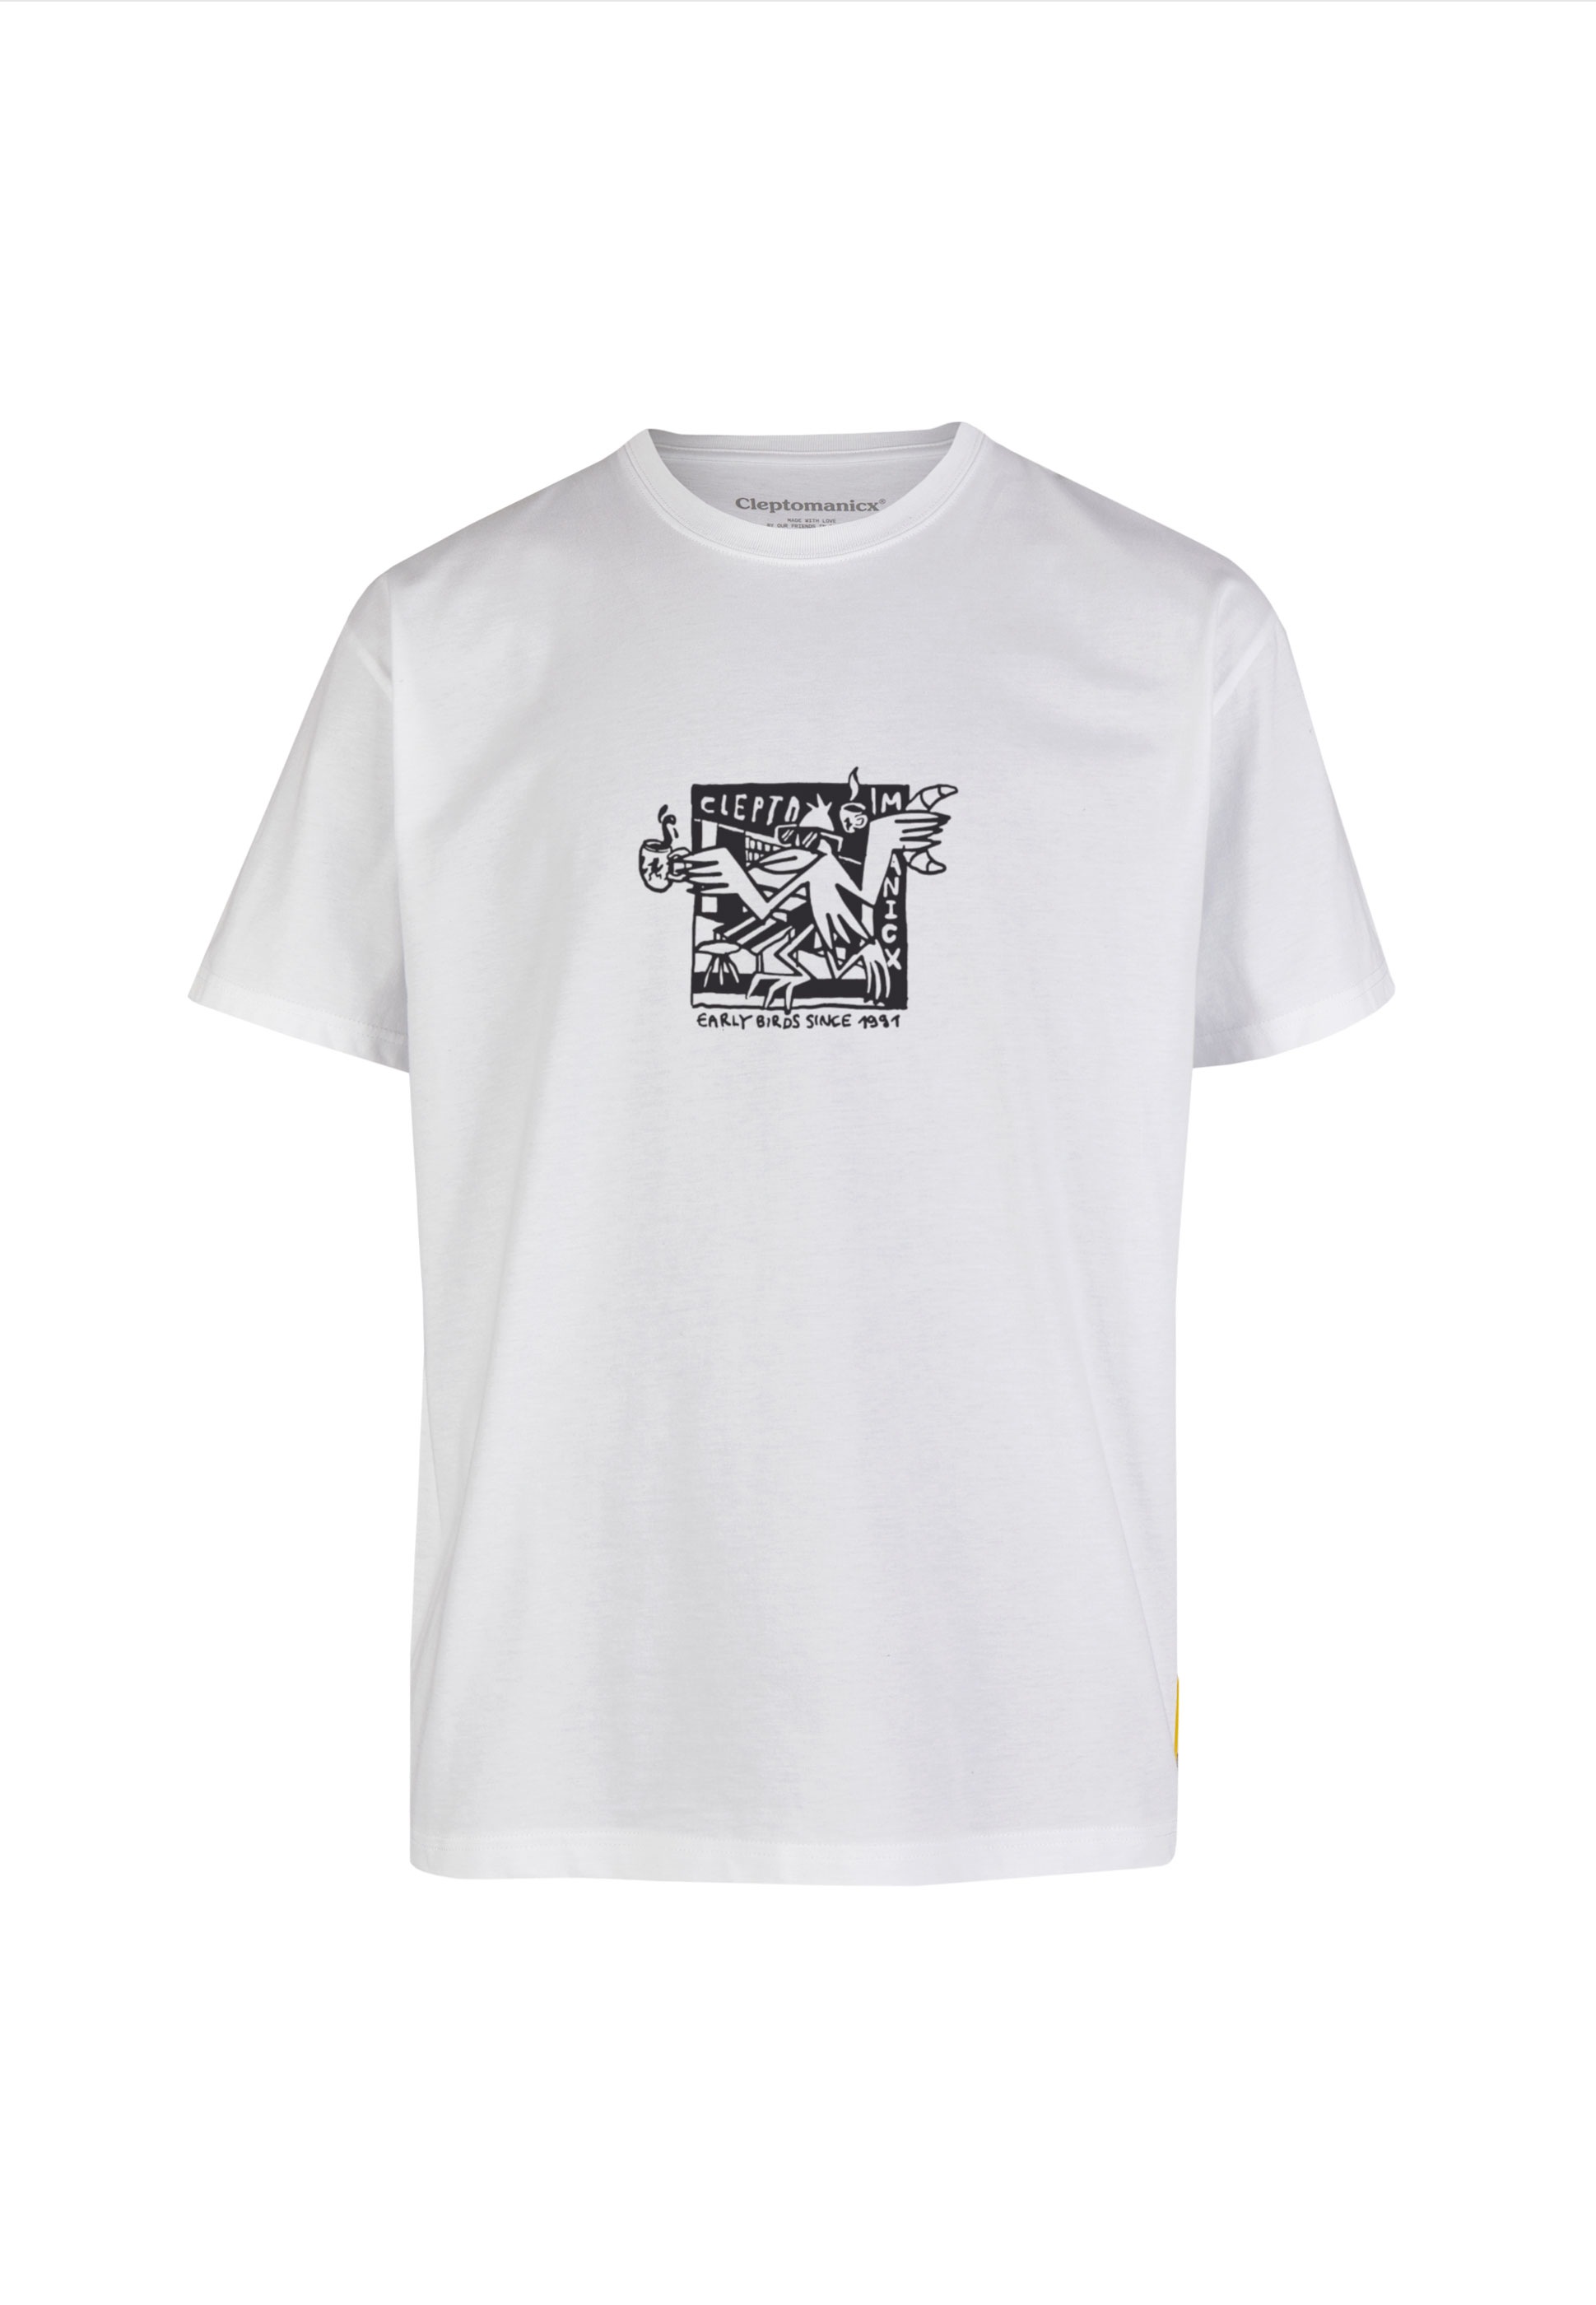 Cleptomanicx T-Shirt »Early Birds«, mit tollem Frontprint